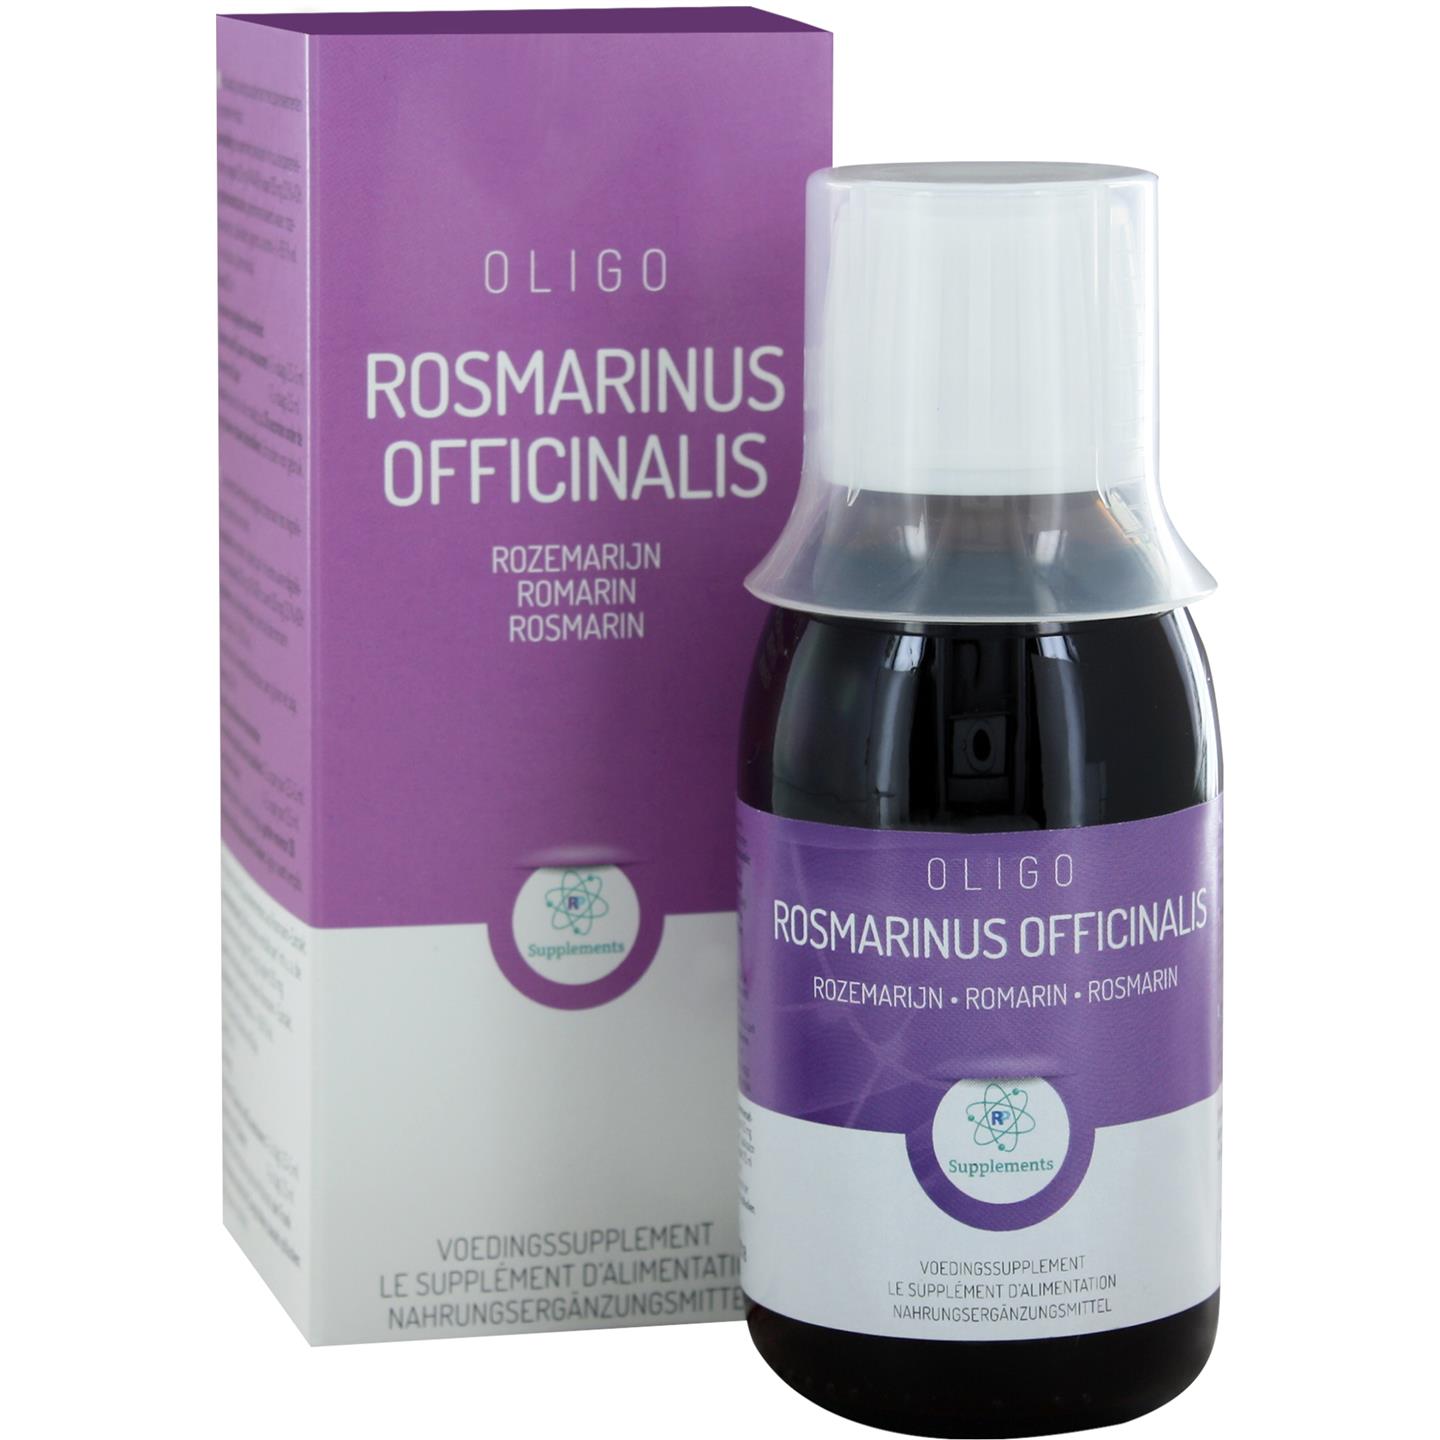 Oligoplant Rosmarinus Rpv 125ml